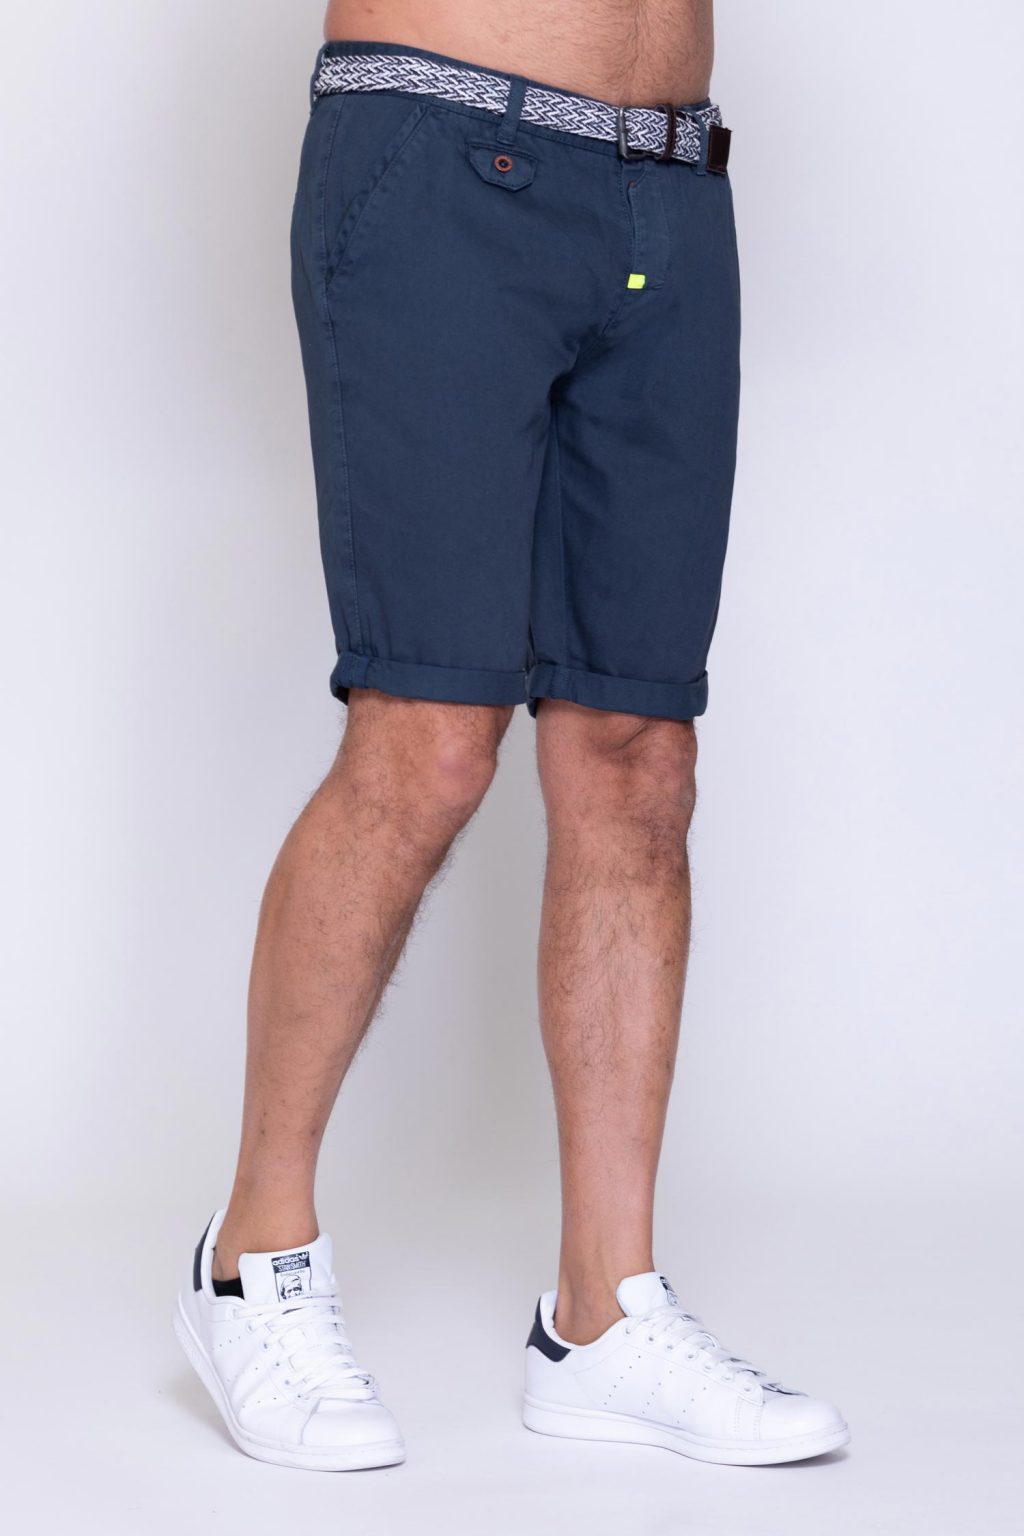 Men's Favor Bermuda shorts in dark blue by MZ72